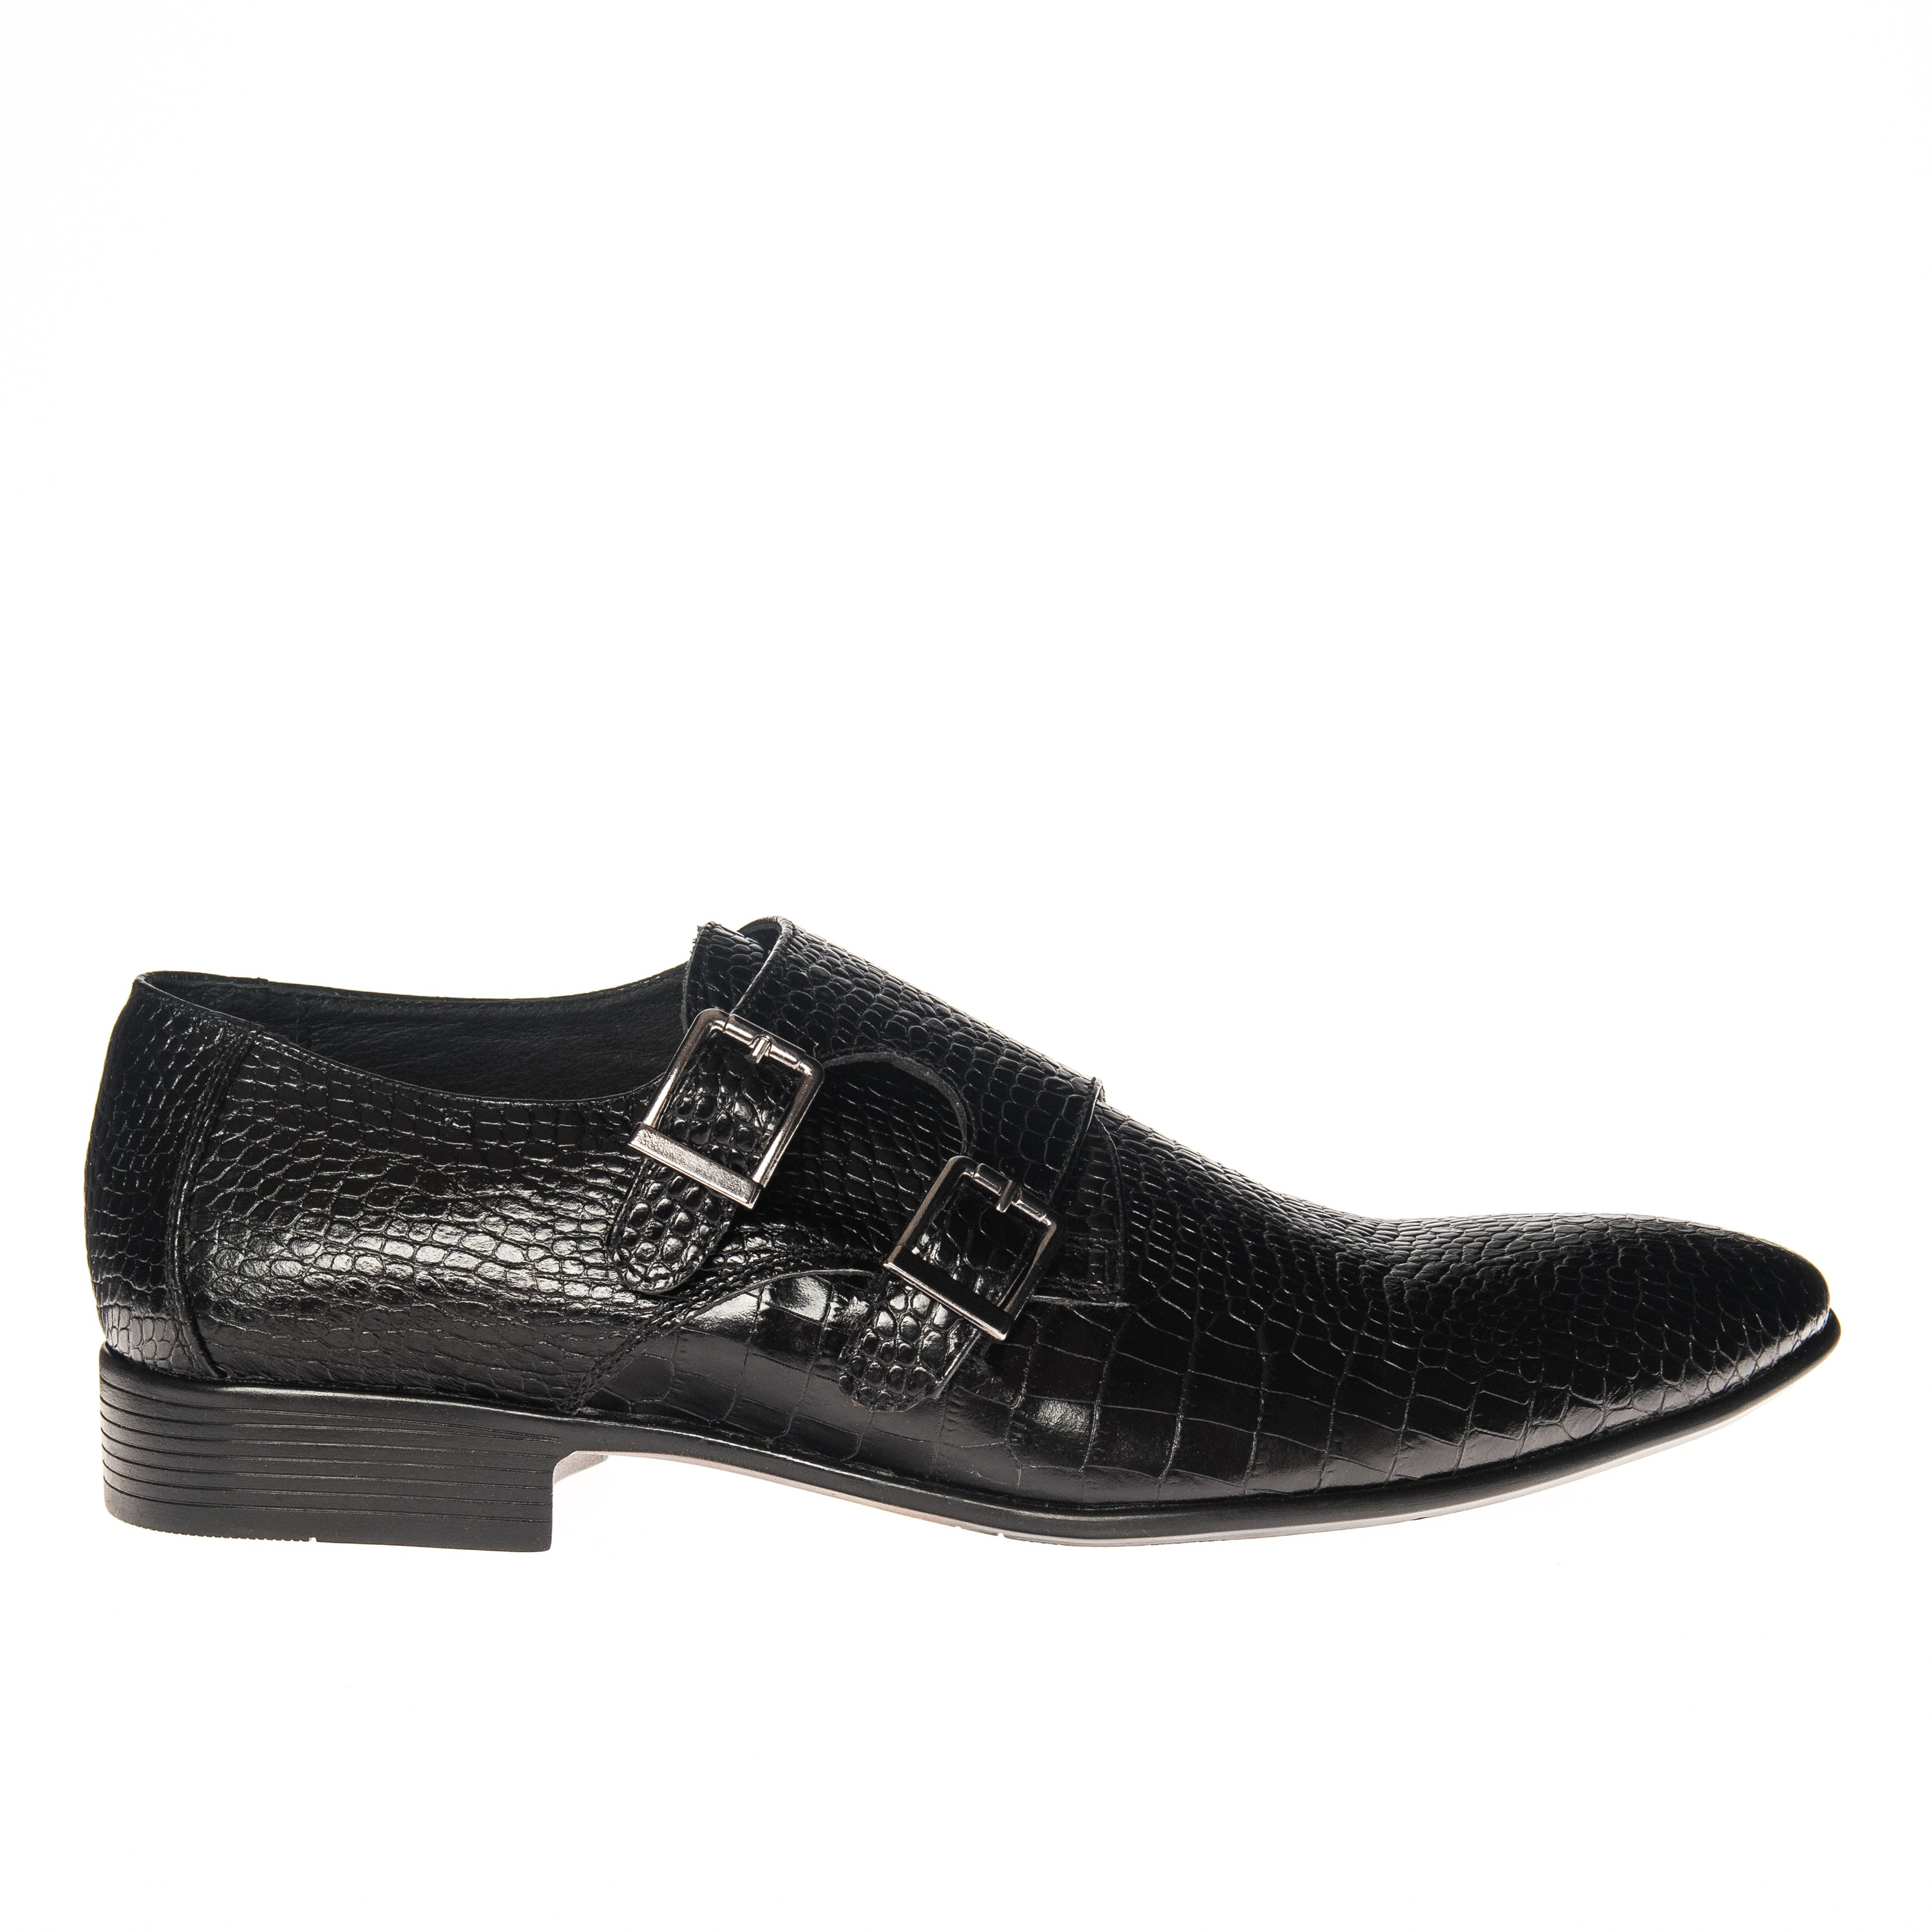 Pantofi barbati din piele naturala - Negru Croco - N4 NC